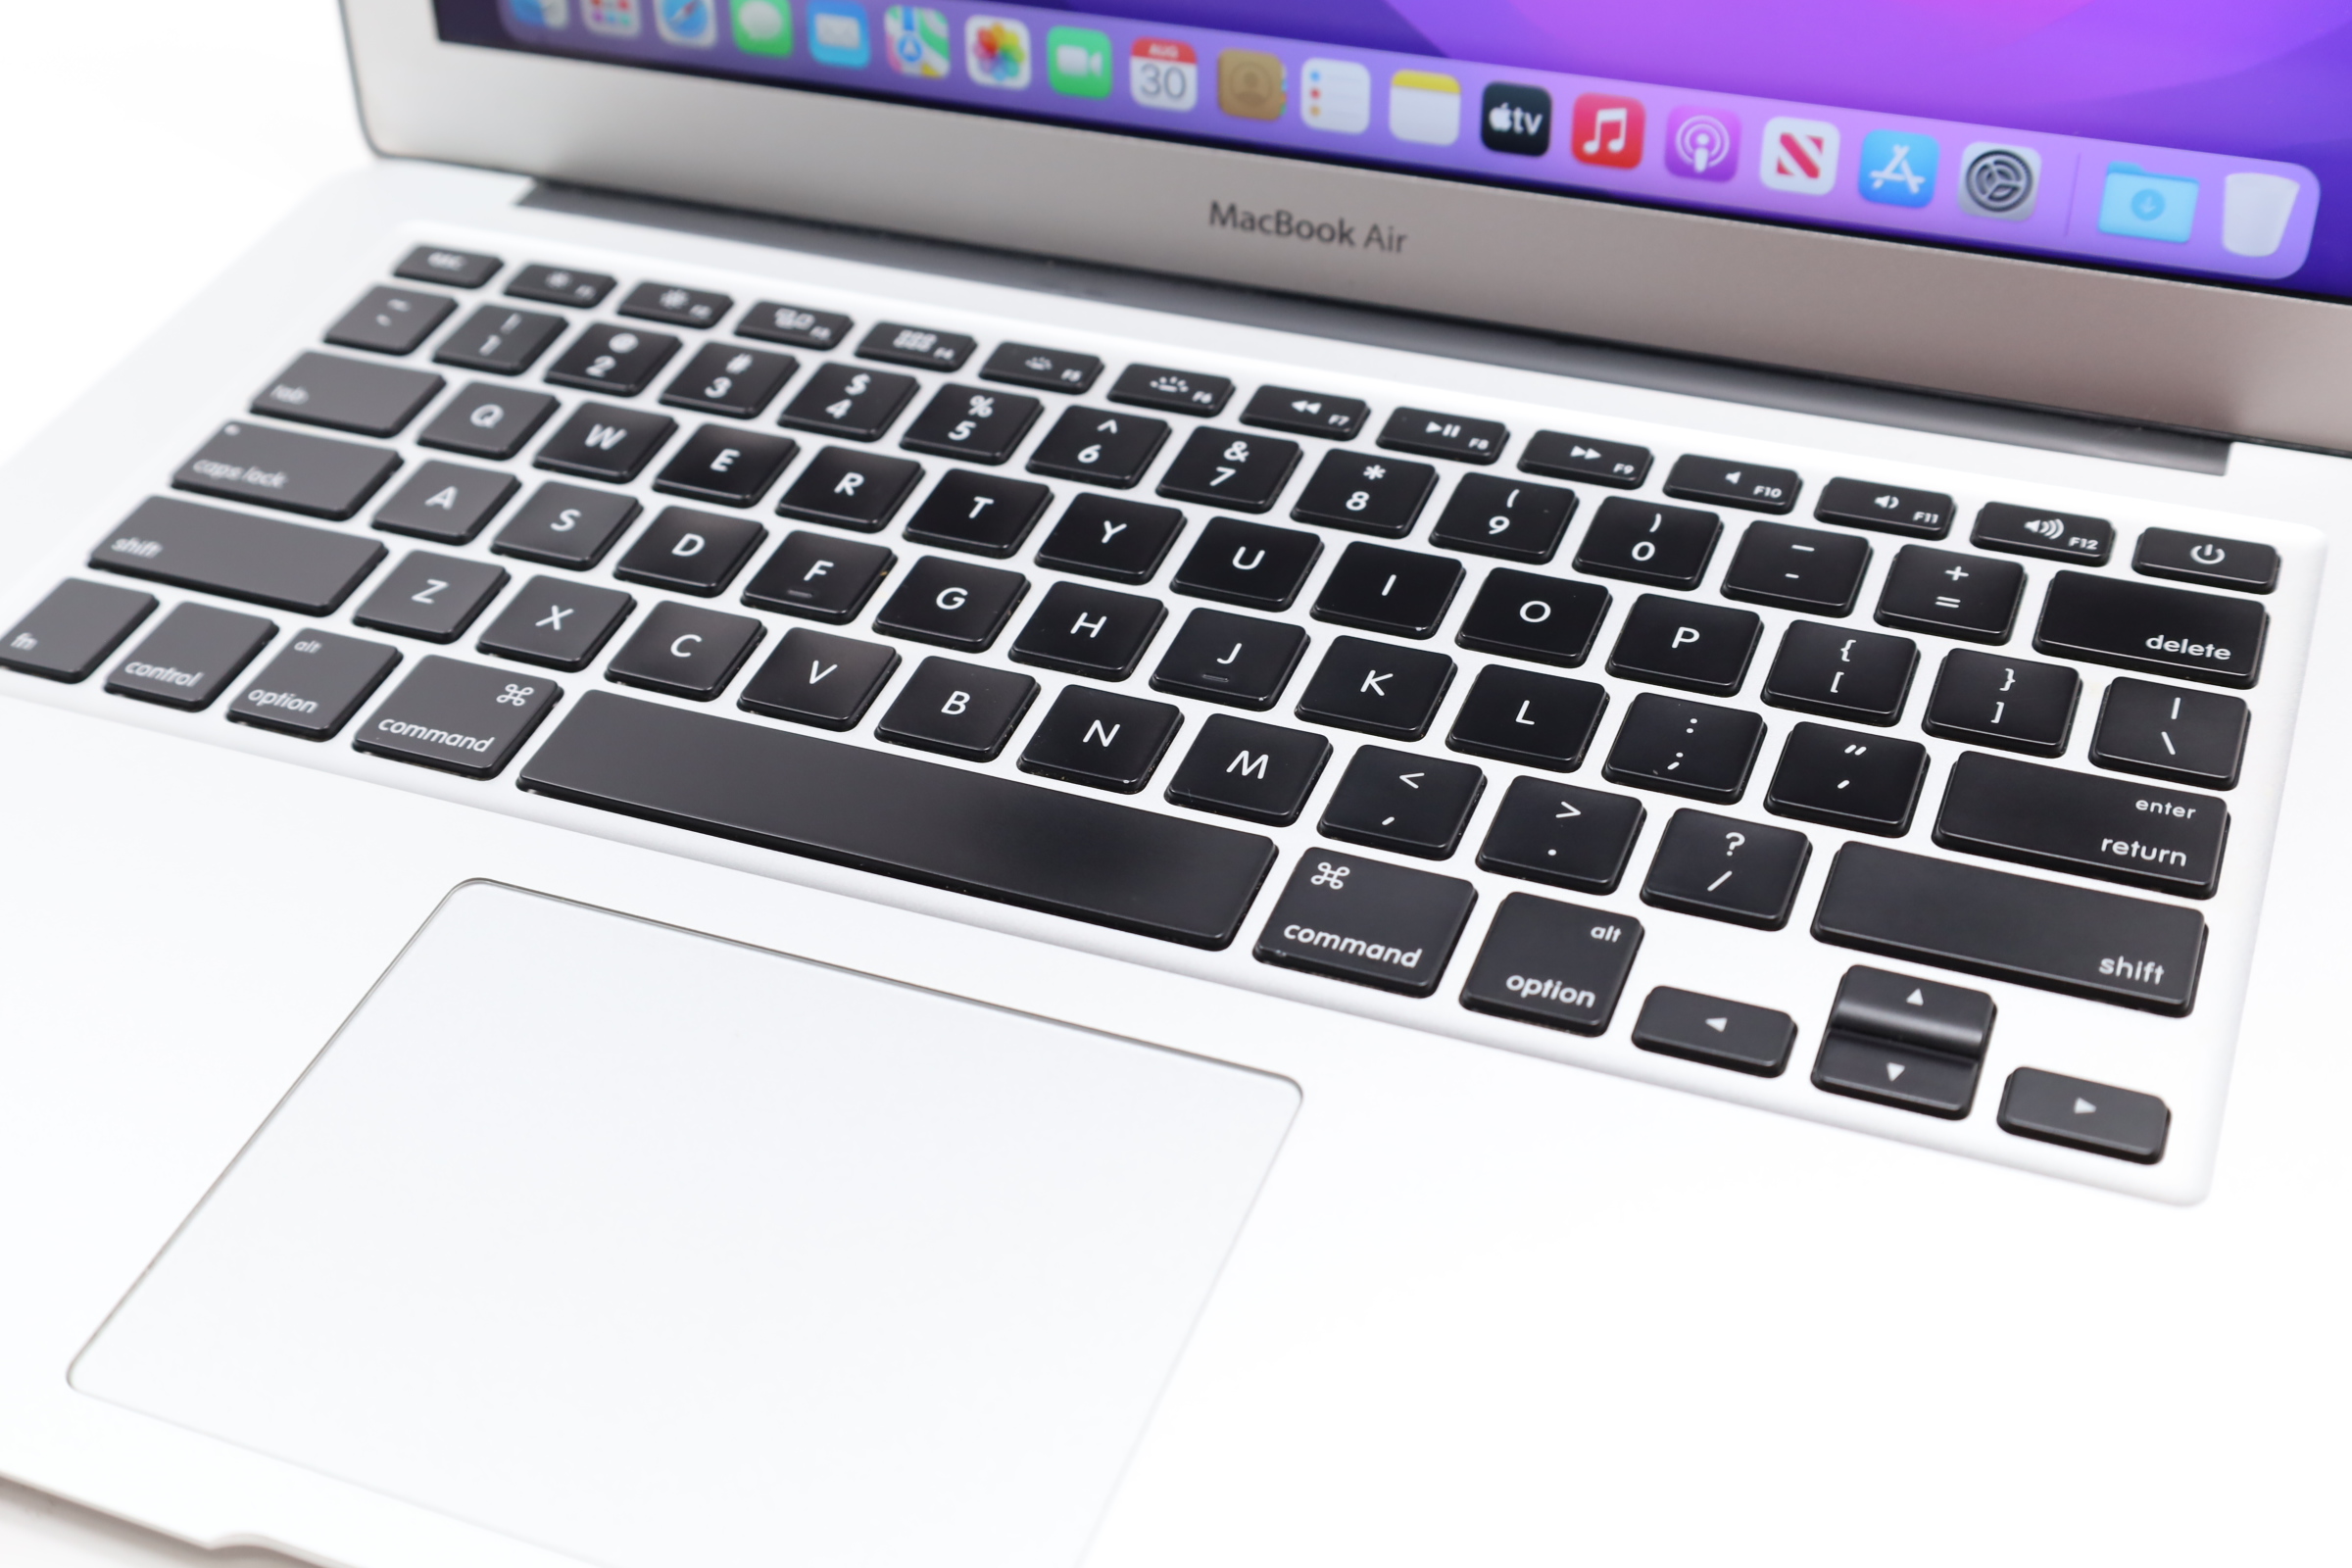 Apple MacBook Air (2015) MJVE2LL/A Intel i5-5250U 1.6GHz 4GB RAM